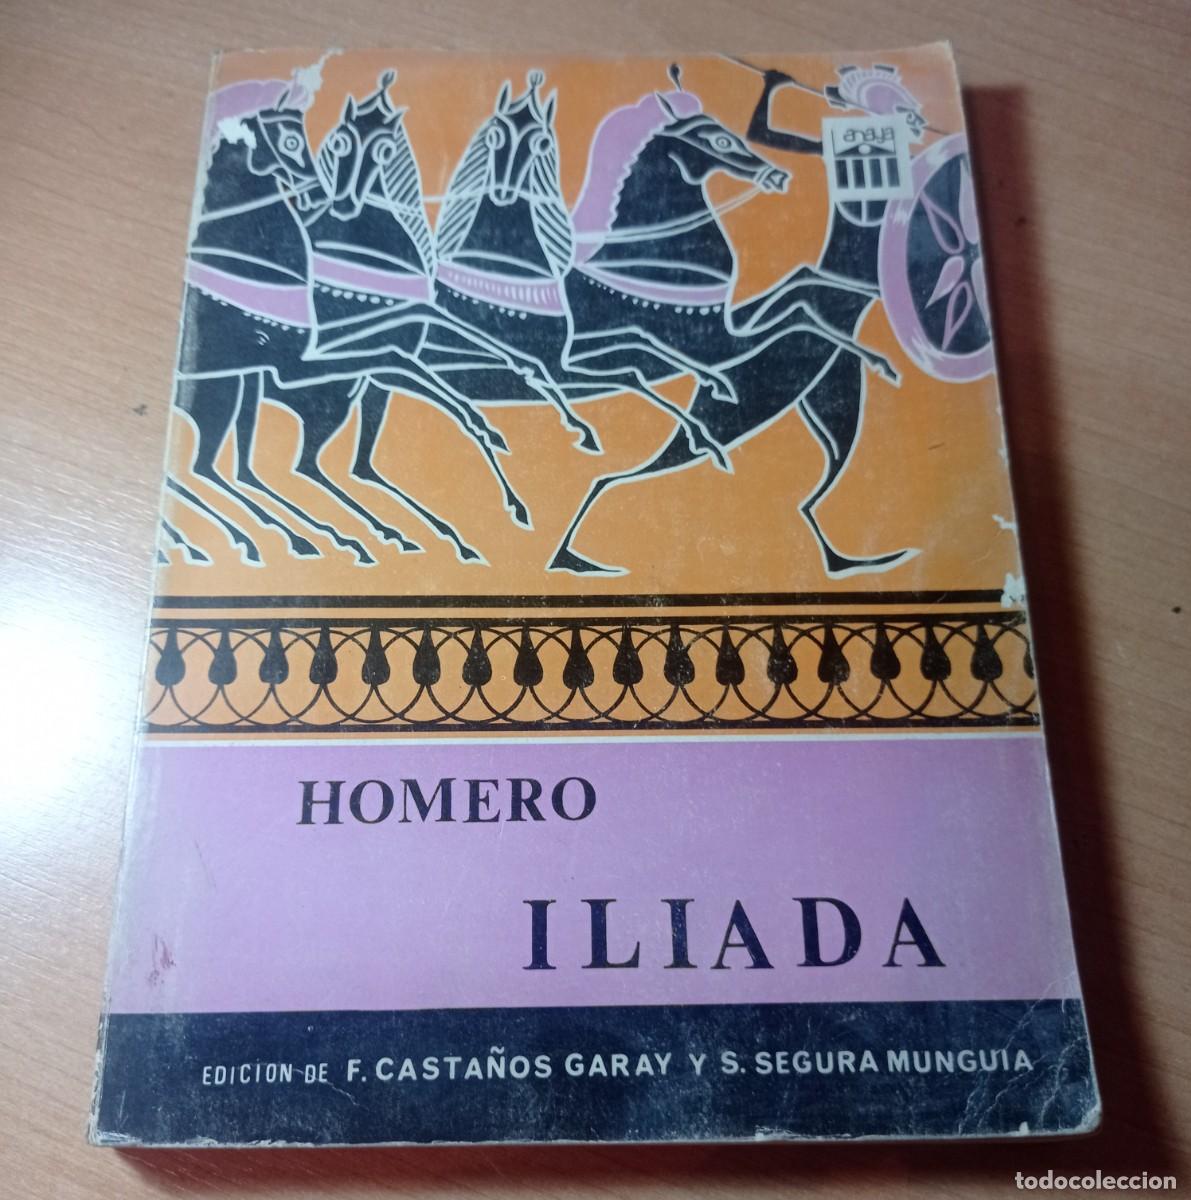 La Iliada (Spanish Edition)